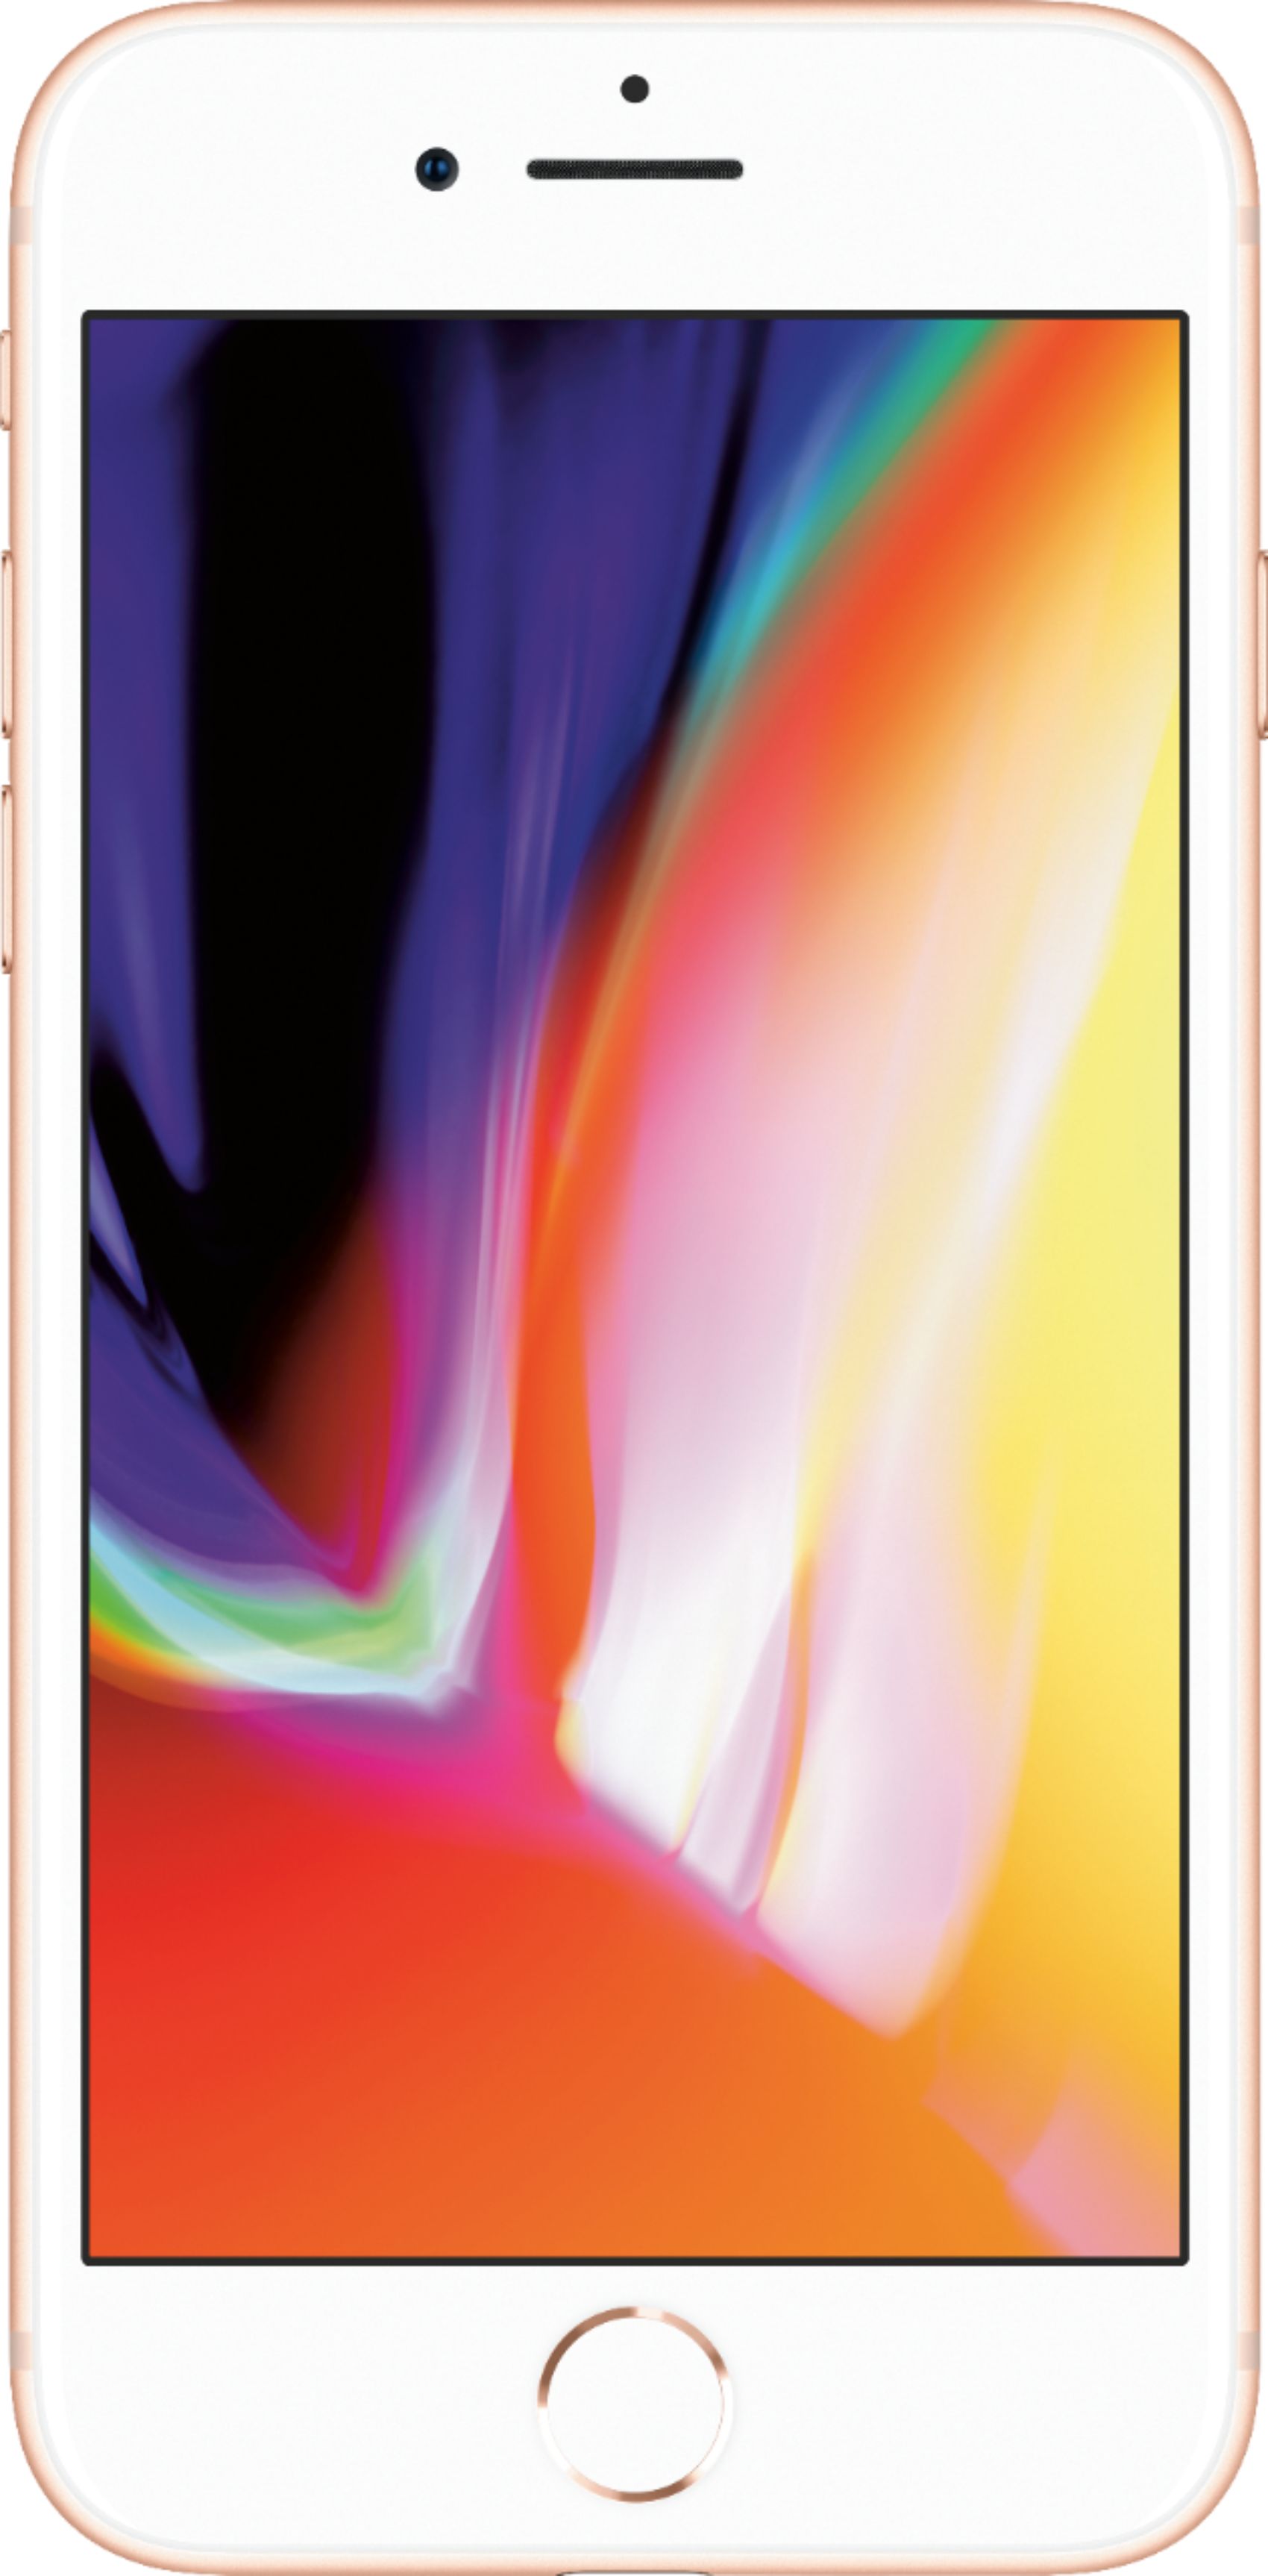 Best Buy Apple Iphone 8 64gb Gold Sprint Mq6m2ll A